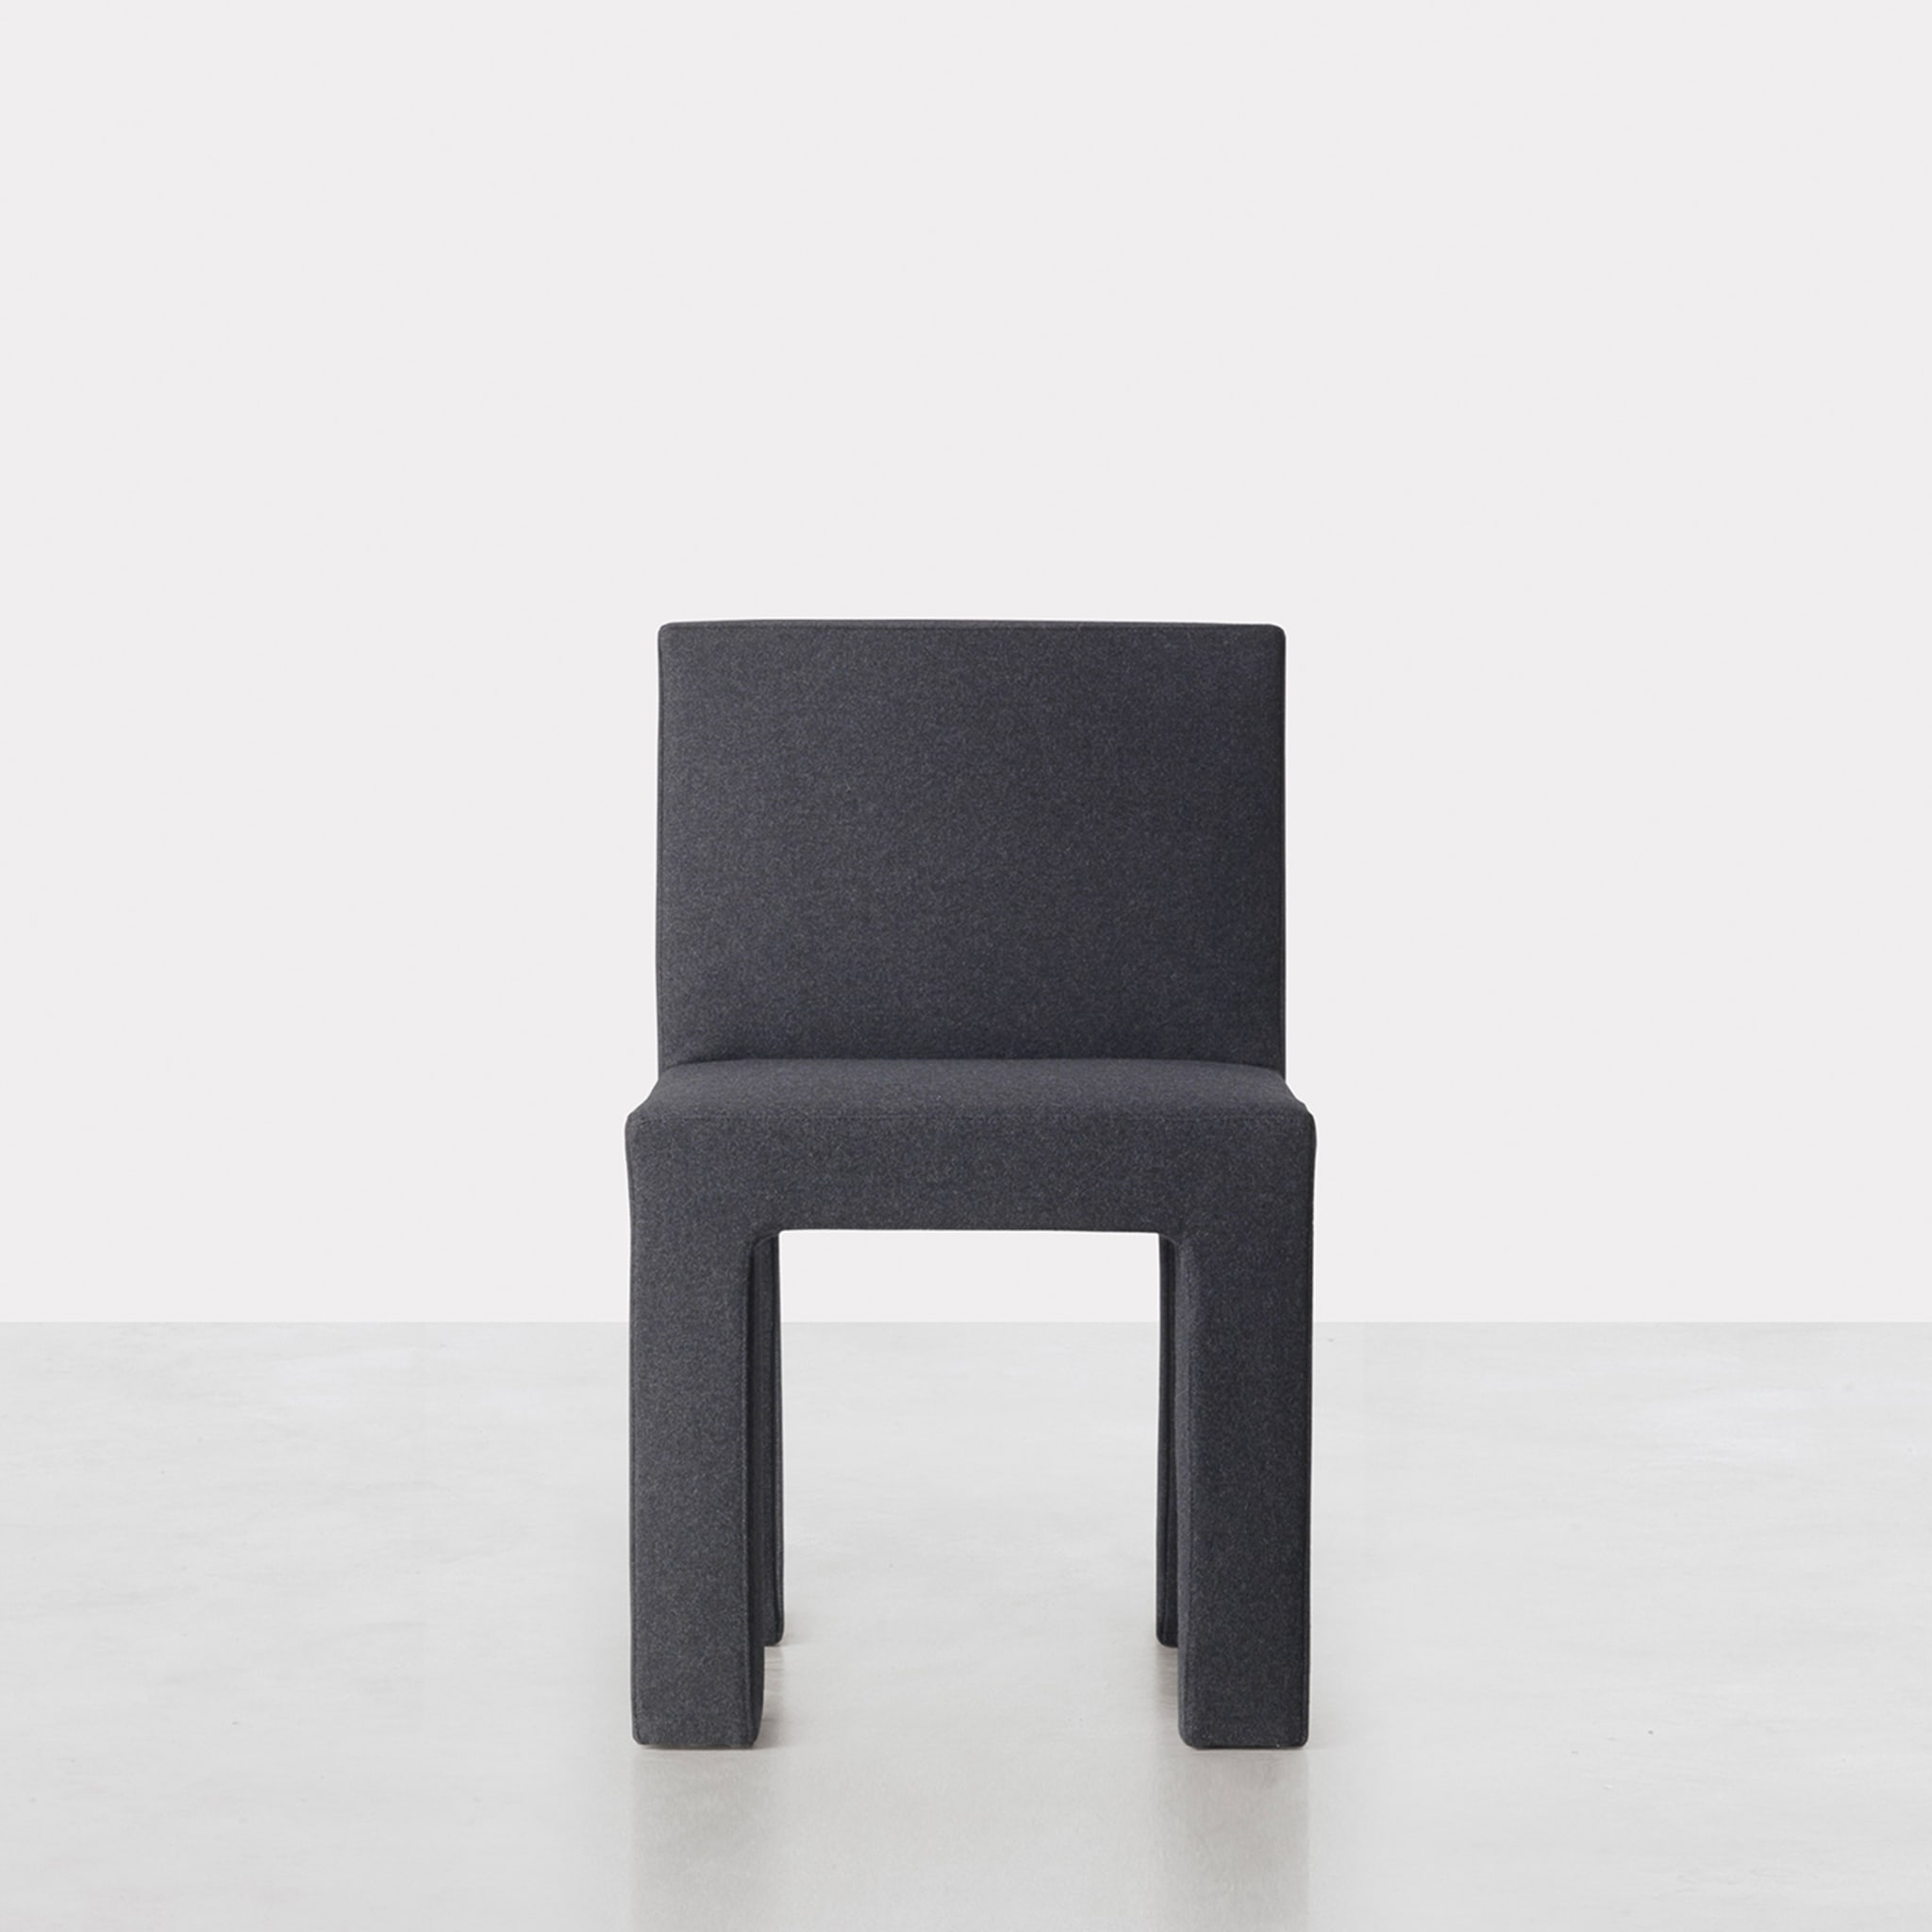 Quadrata Gray Chair by Dainelli Studio - Alternative view 1